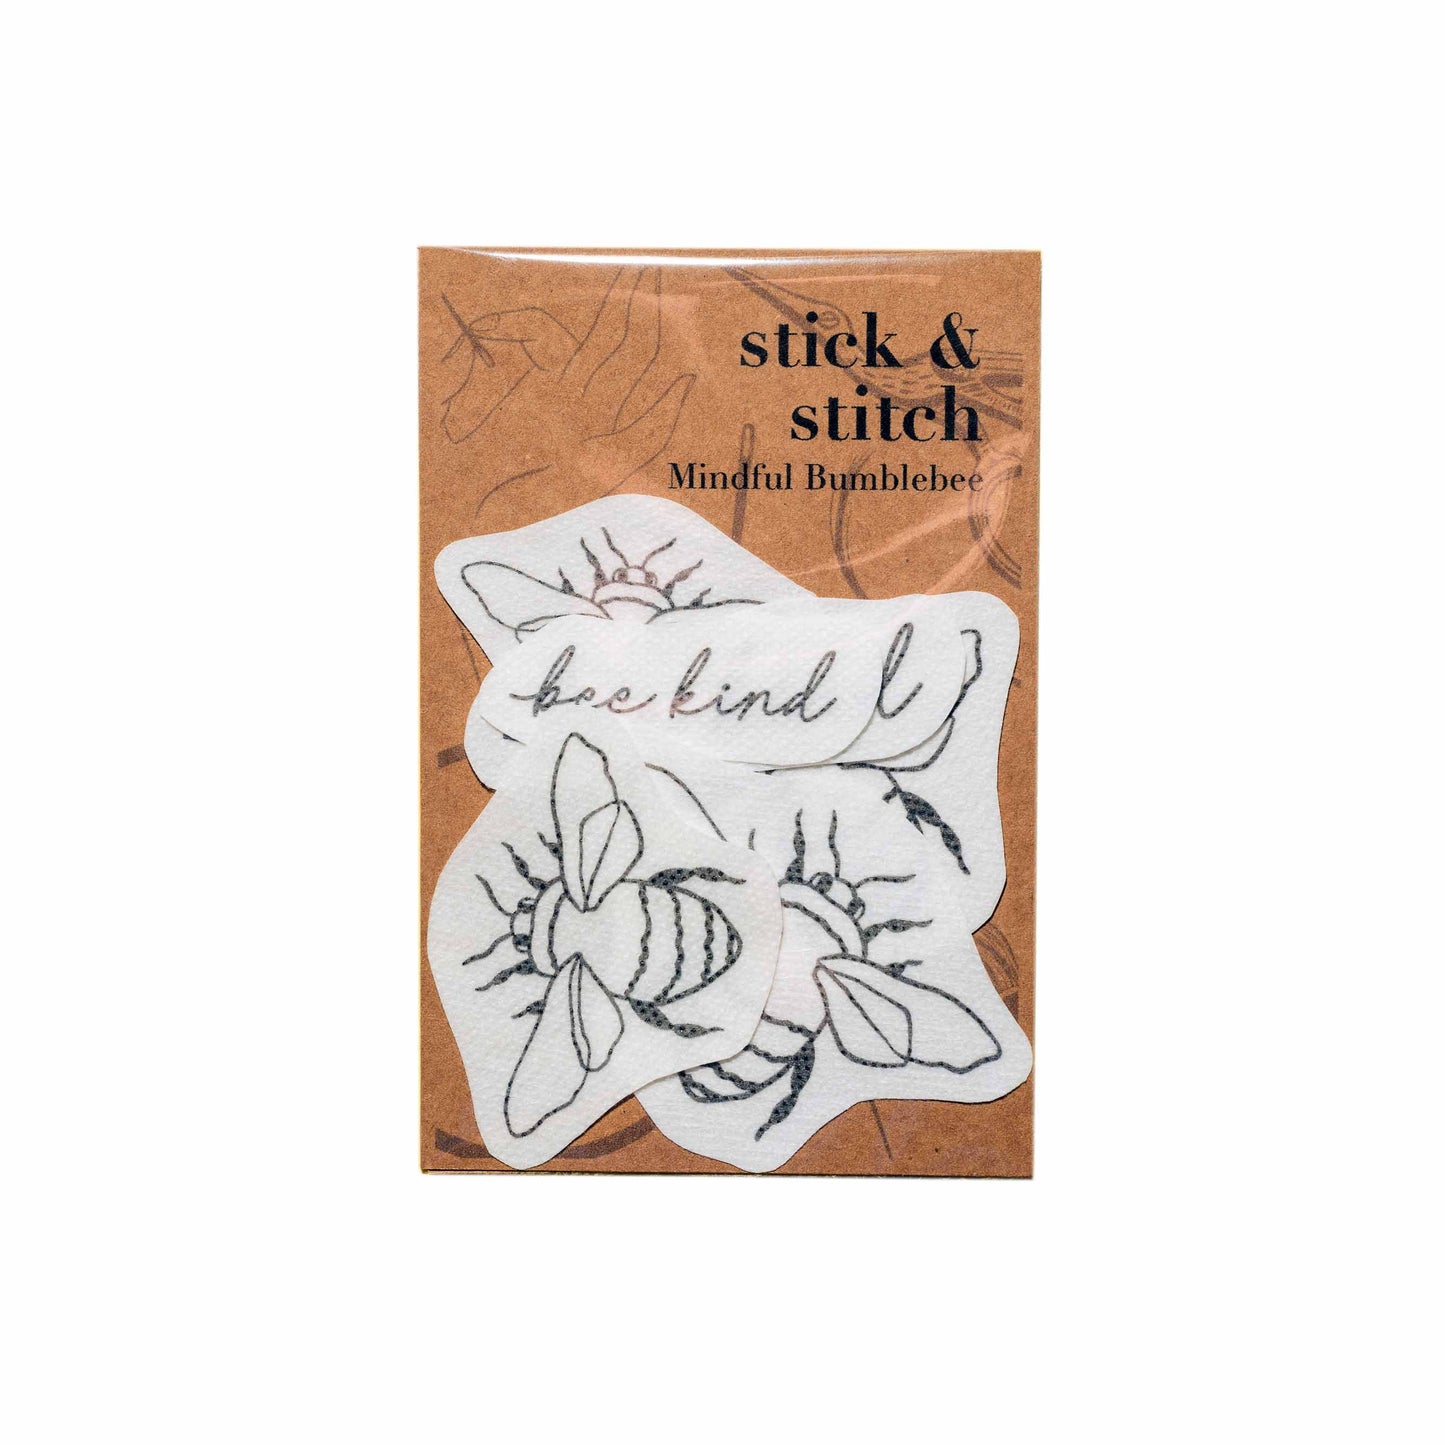 The Mindful Bumblebee - Stick & Stitch